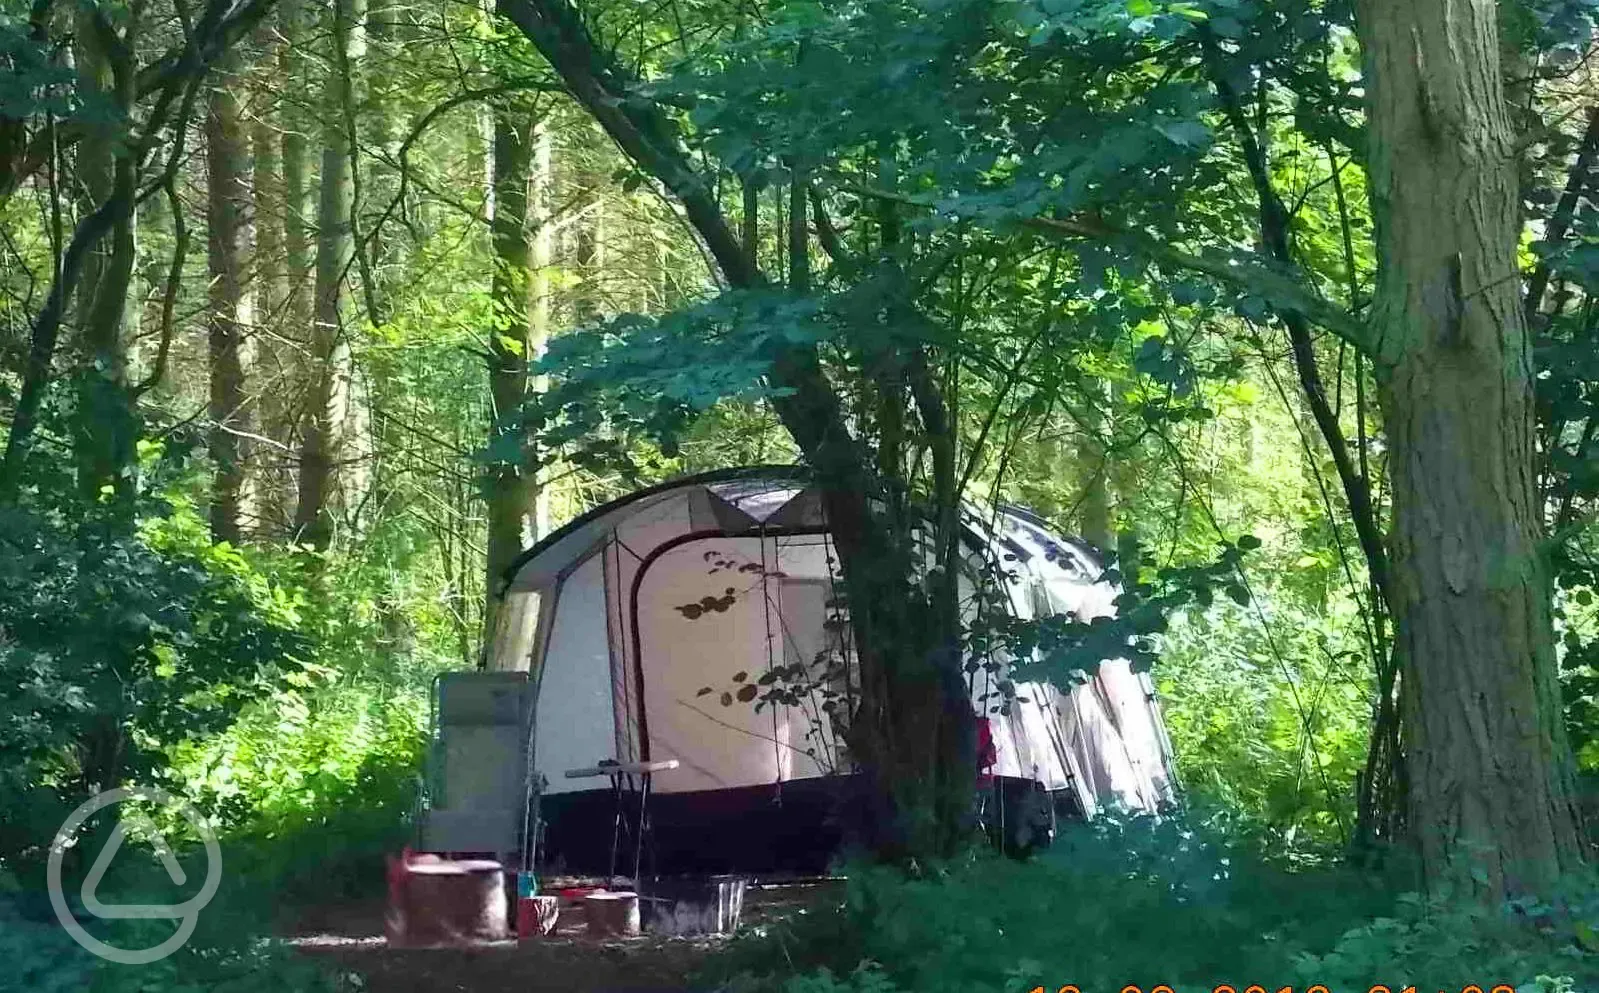 Wild woodland camping